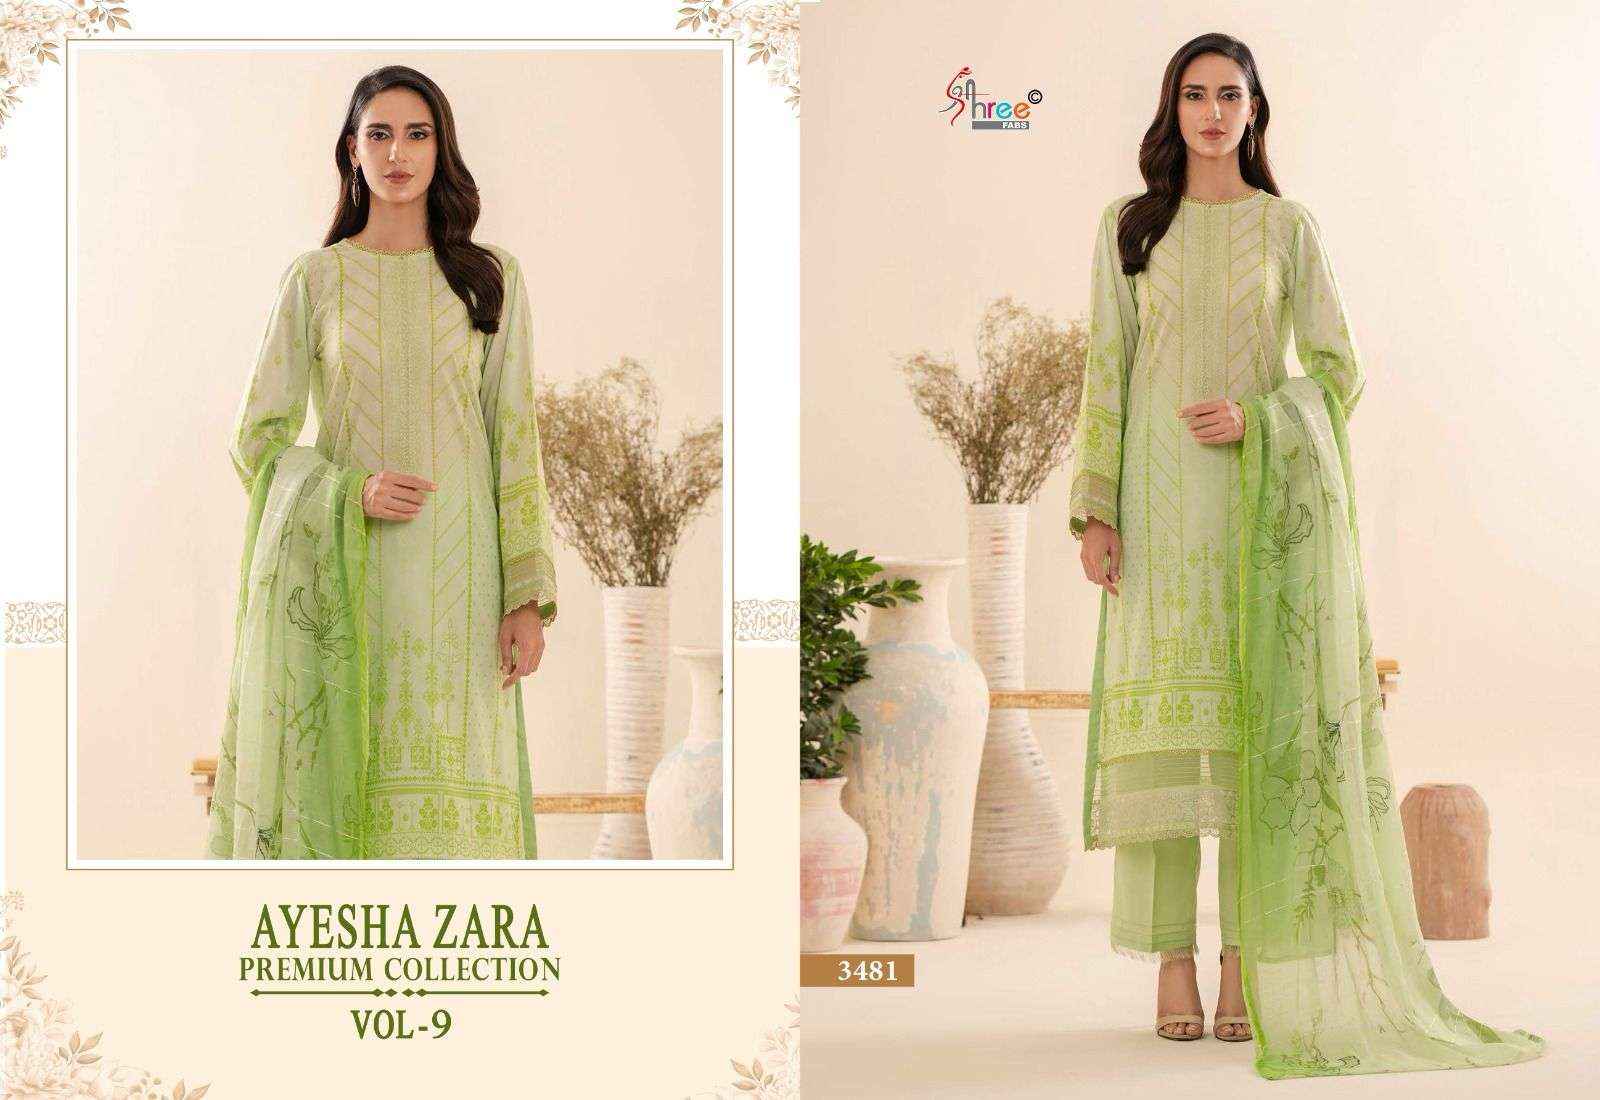 Shree Fabs Ayesha Zara Premium Collection Vol 9 Cotton Dress Material 6 pcs Catalogue